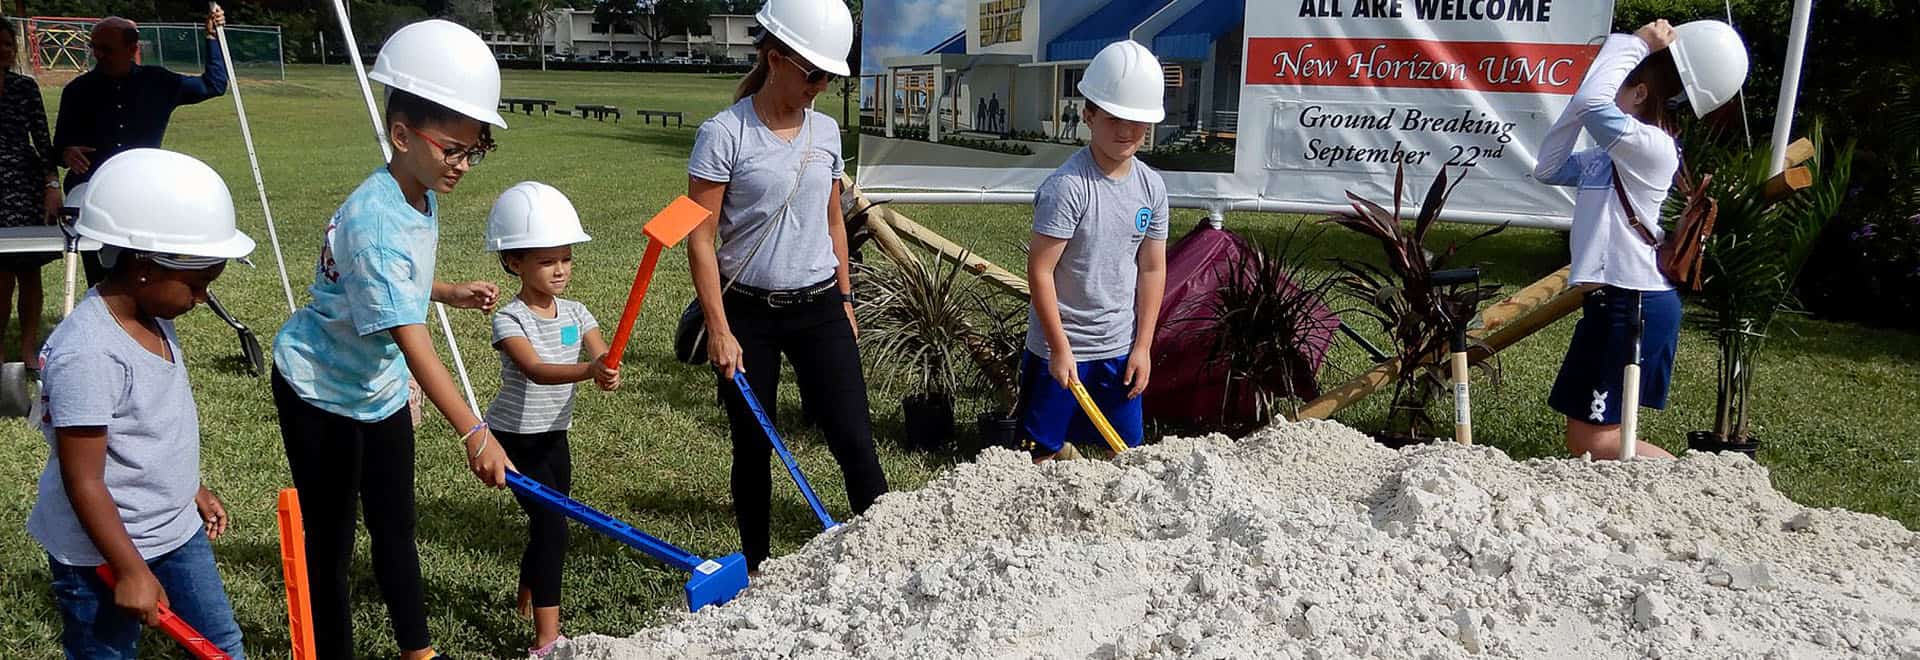 New Horizon kids help break ground in 2020. (NHSWR photo)
